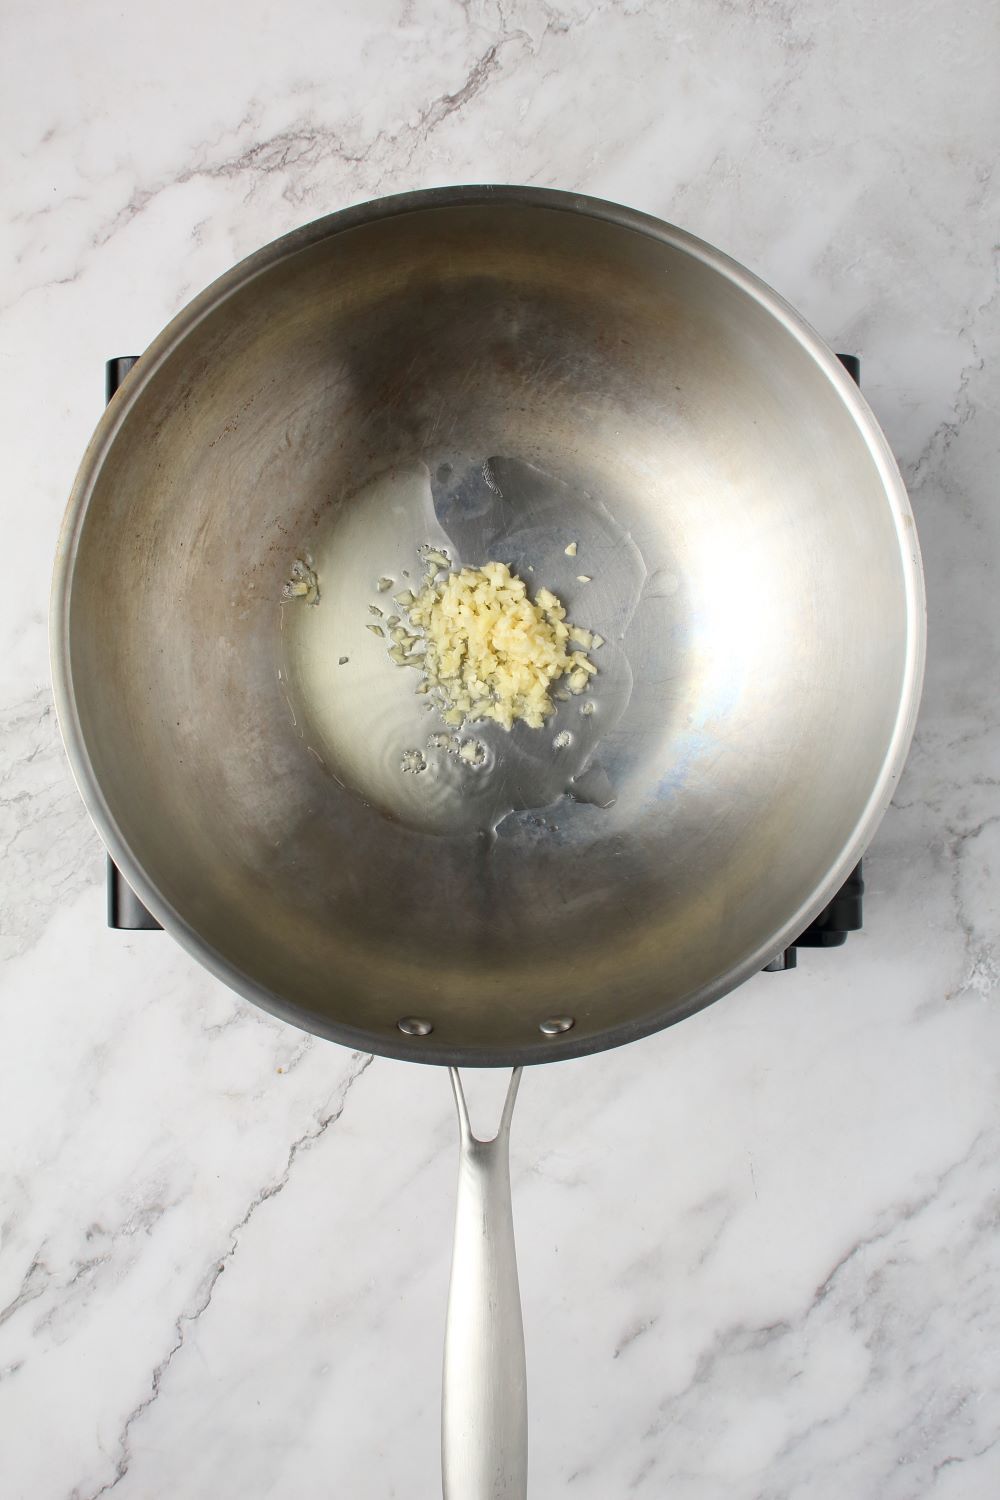 Adding the minced garlic